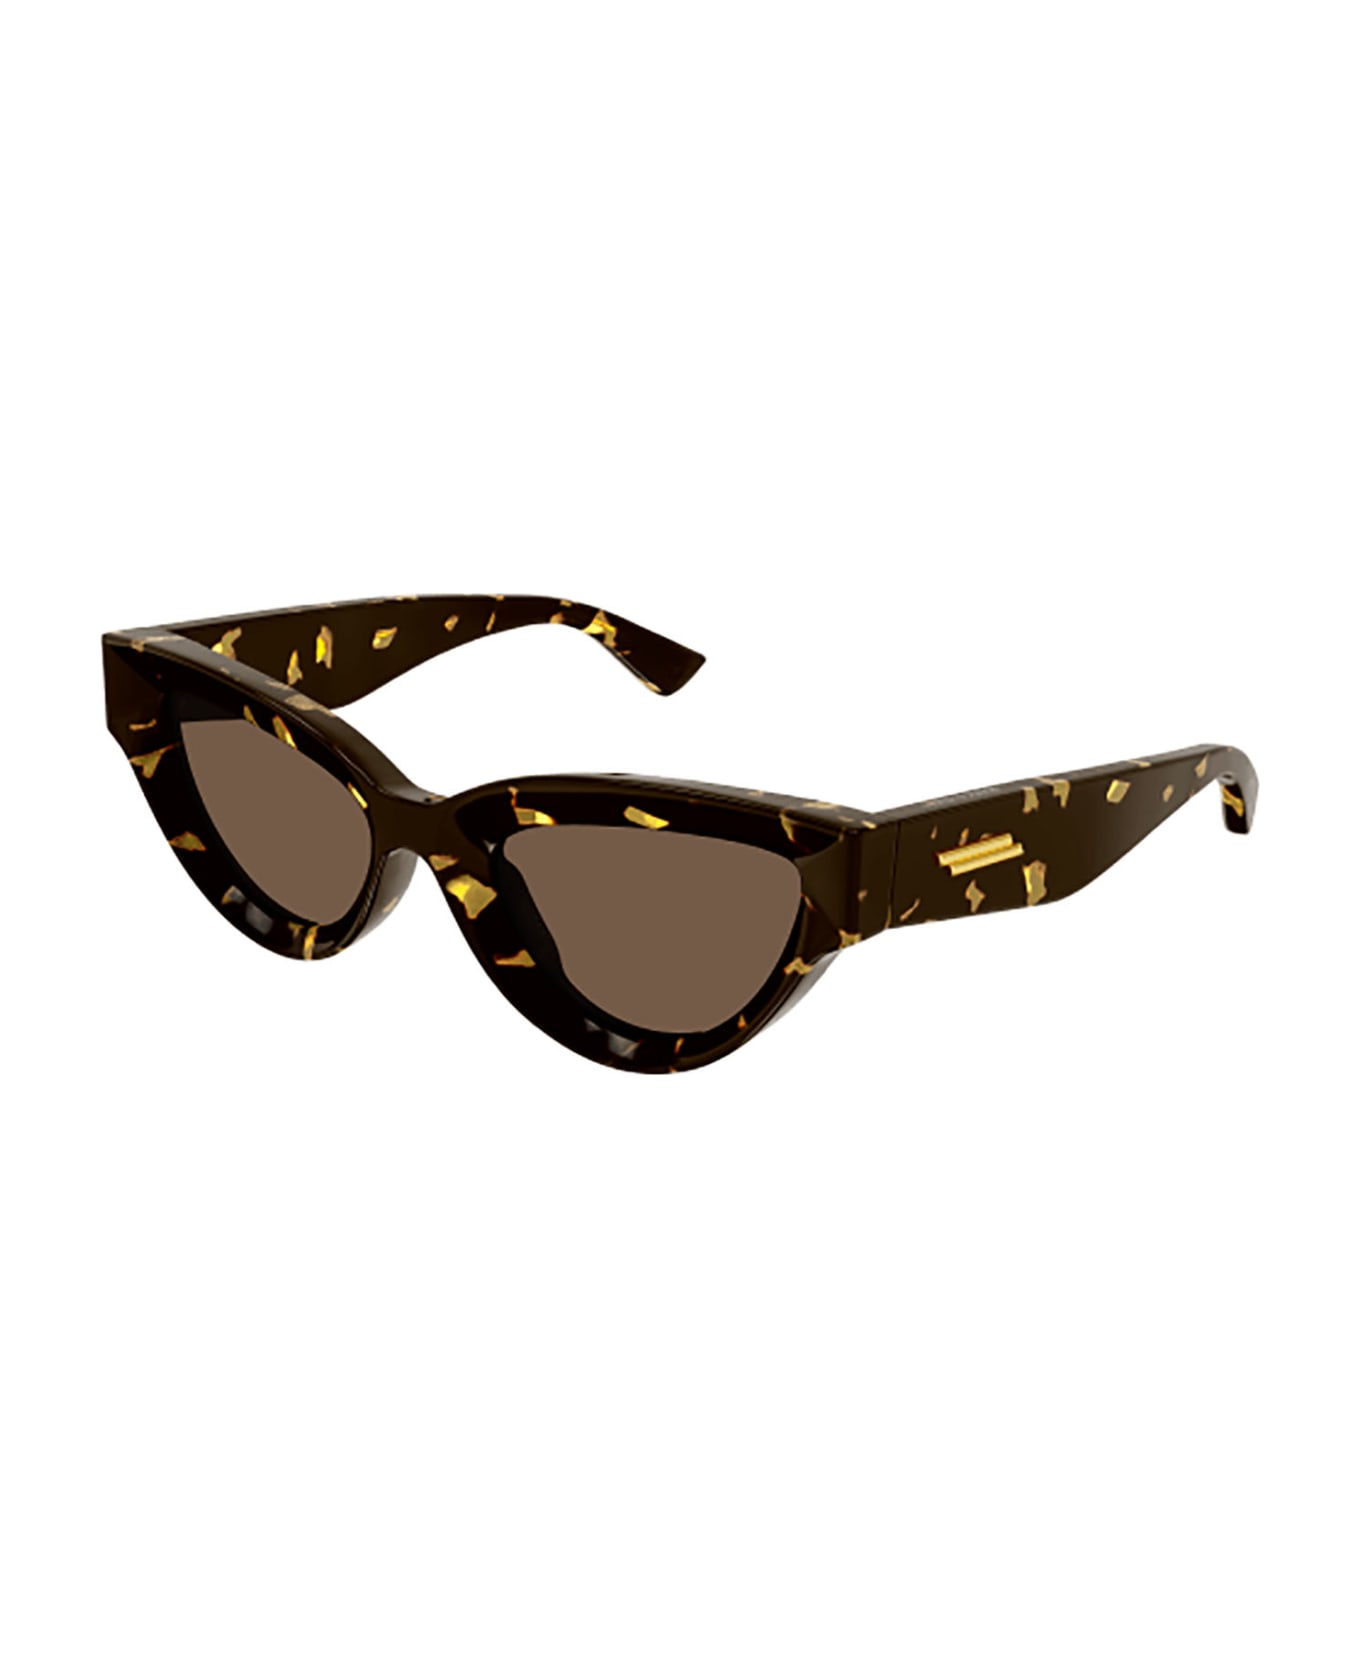 Bottega Veneta Eyewear Bv1249s Sunglasses - 002 havana havana brown